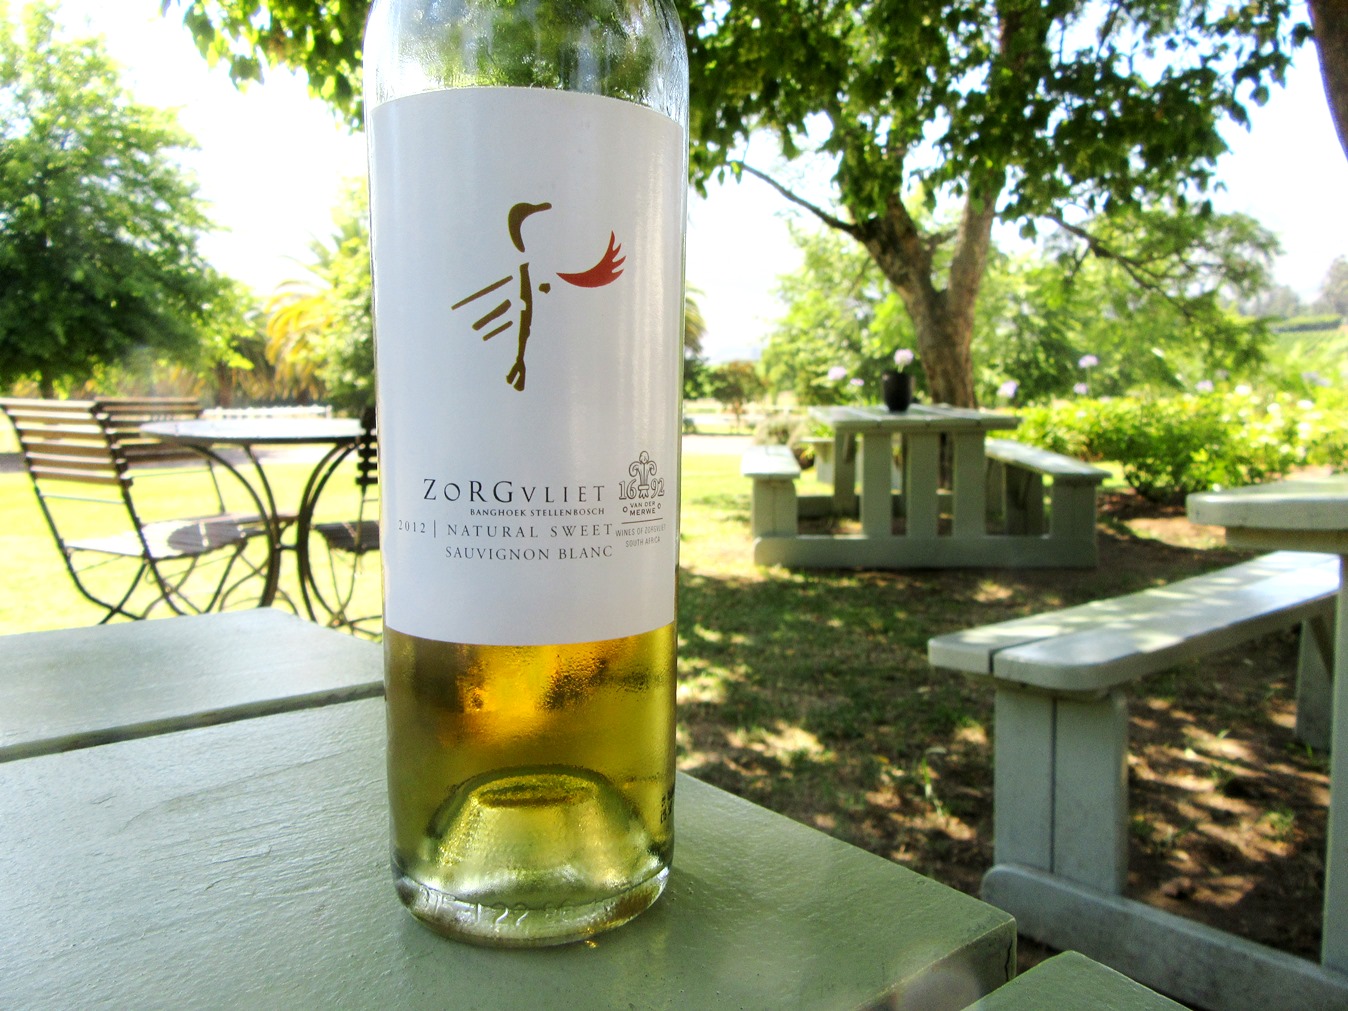 Zorgvliet, Natural Sweet Sauvignon Blanc 2012, Banghoek, South Africa, Wine Casual